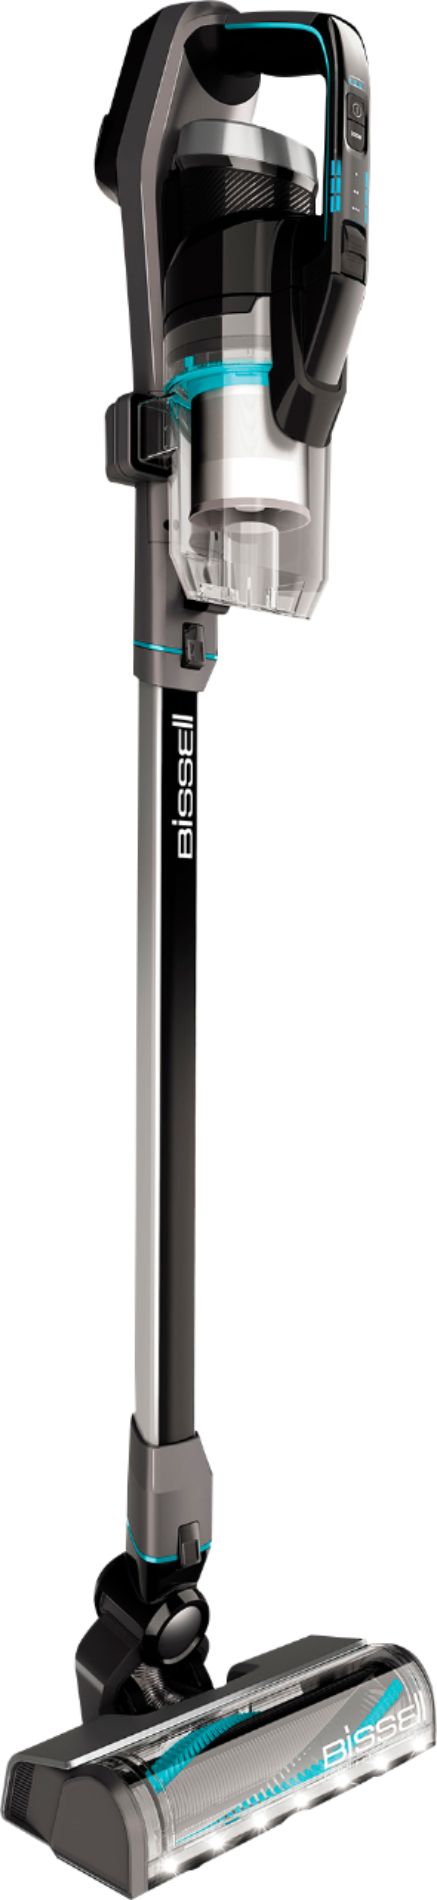 Angle View: BISSELL - ICONpet Cordless Stick Vacuum - Titanium/Black